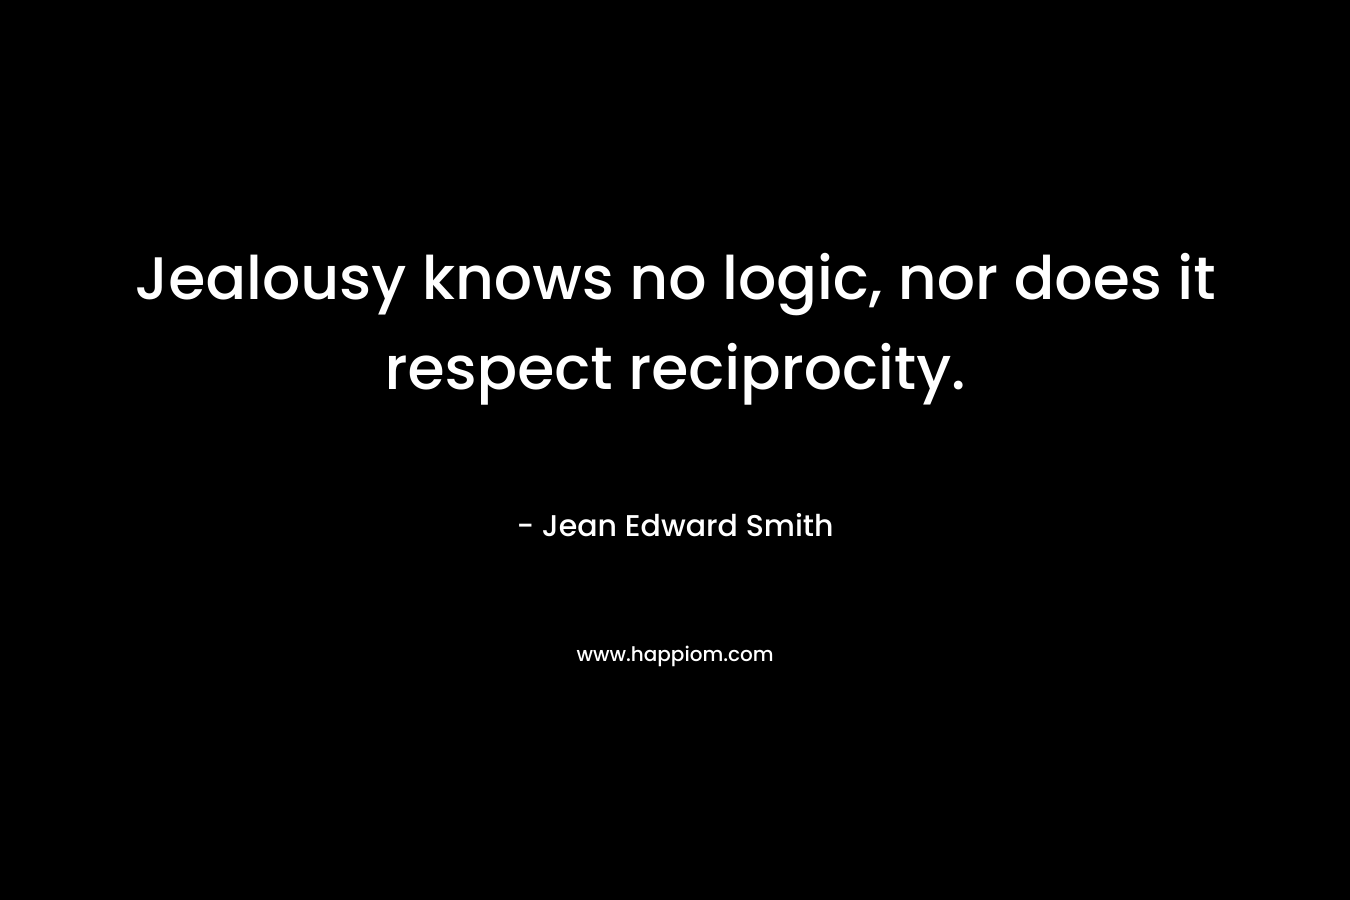 Jealousy knows no logic, nor does it respect reciprocity. – Jean Edward Smith